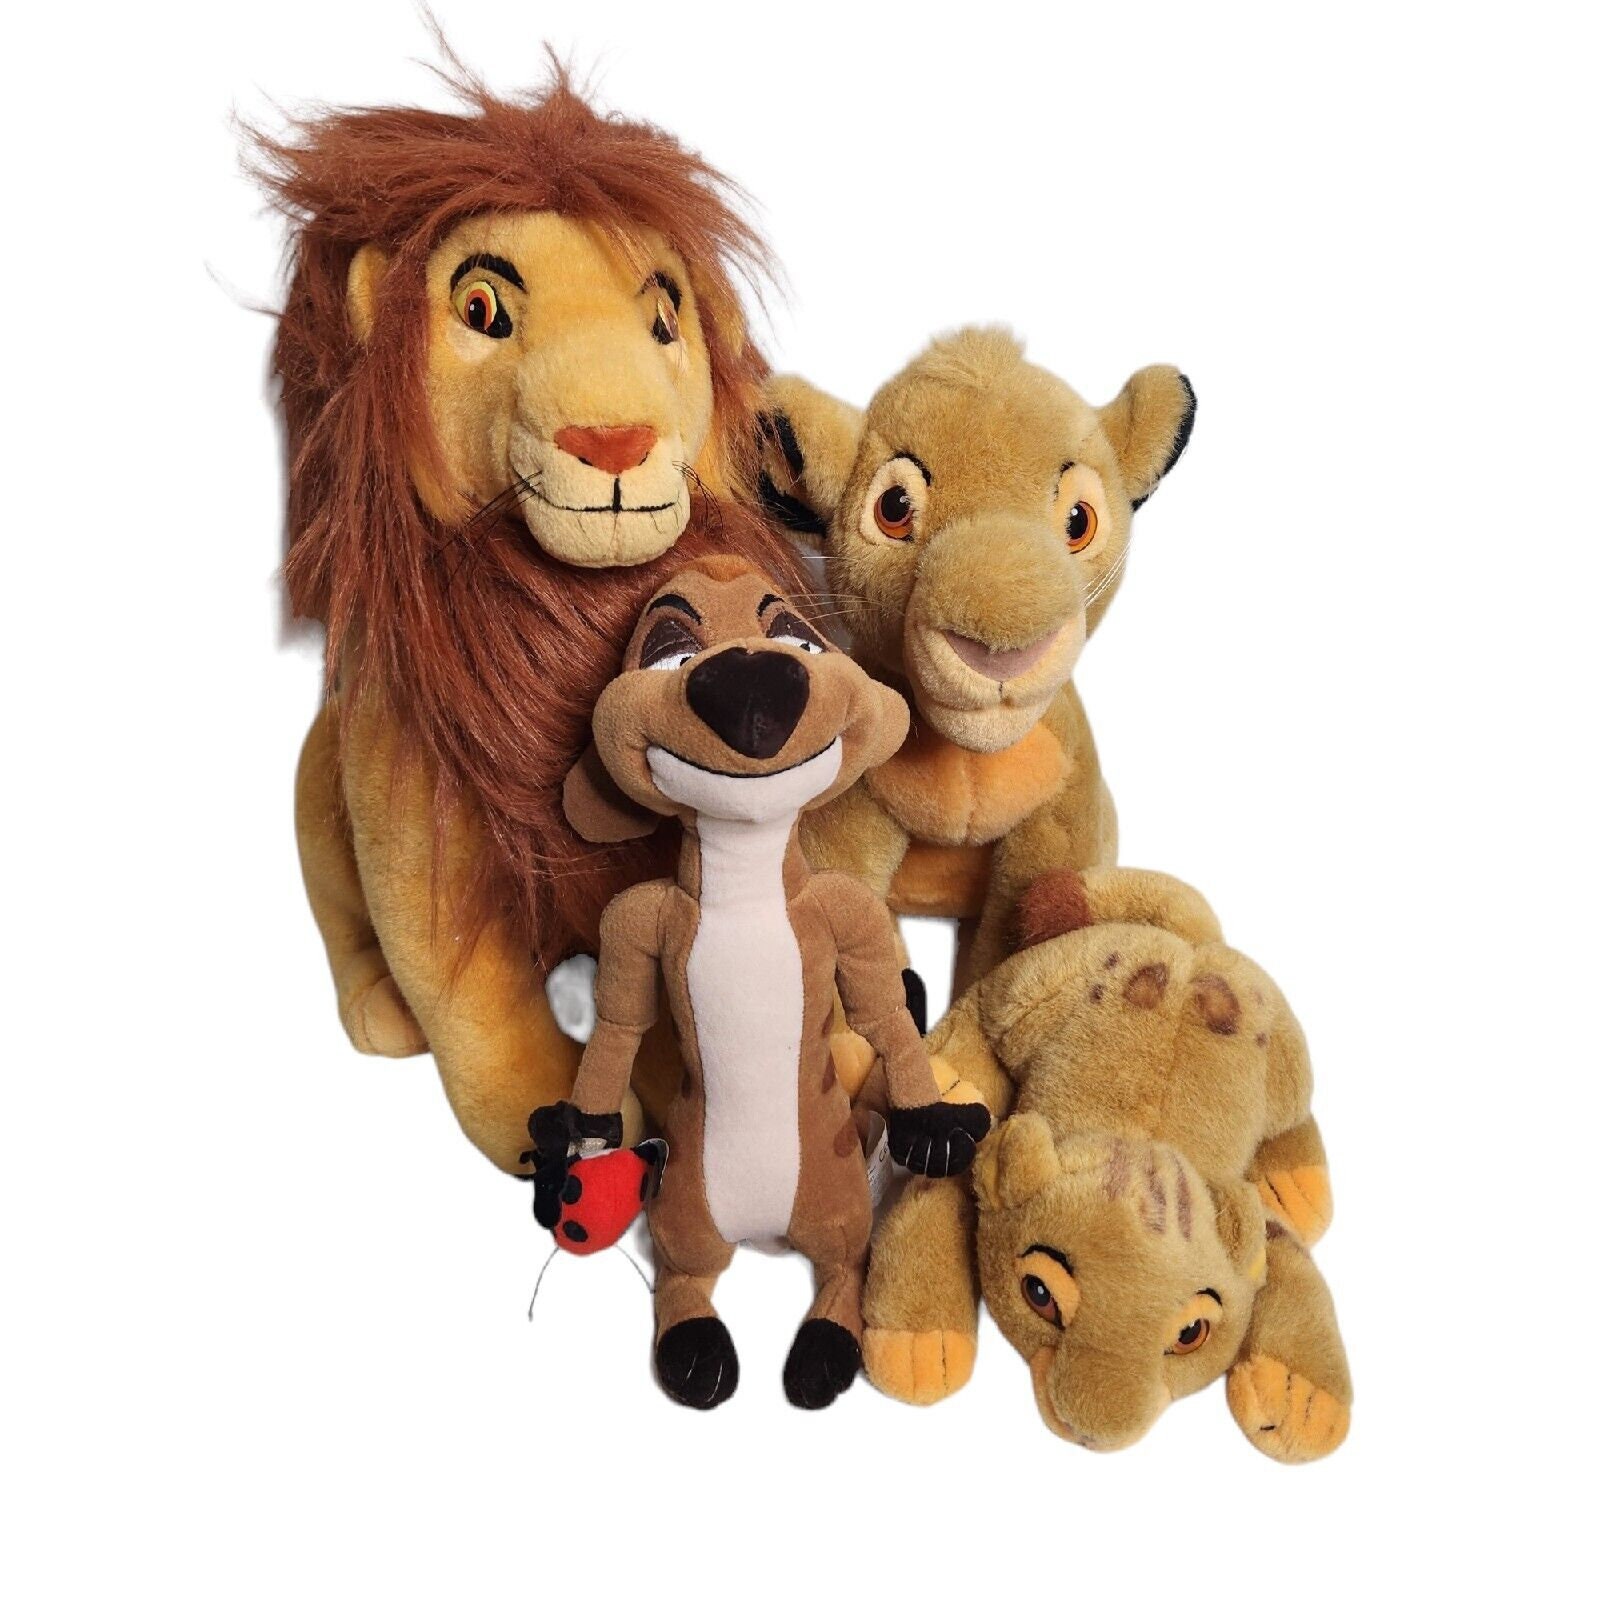 Doudou peluche Simba LE ROI LION - Disney Store London The Lion King plush  16 cm x